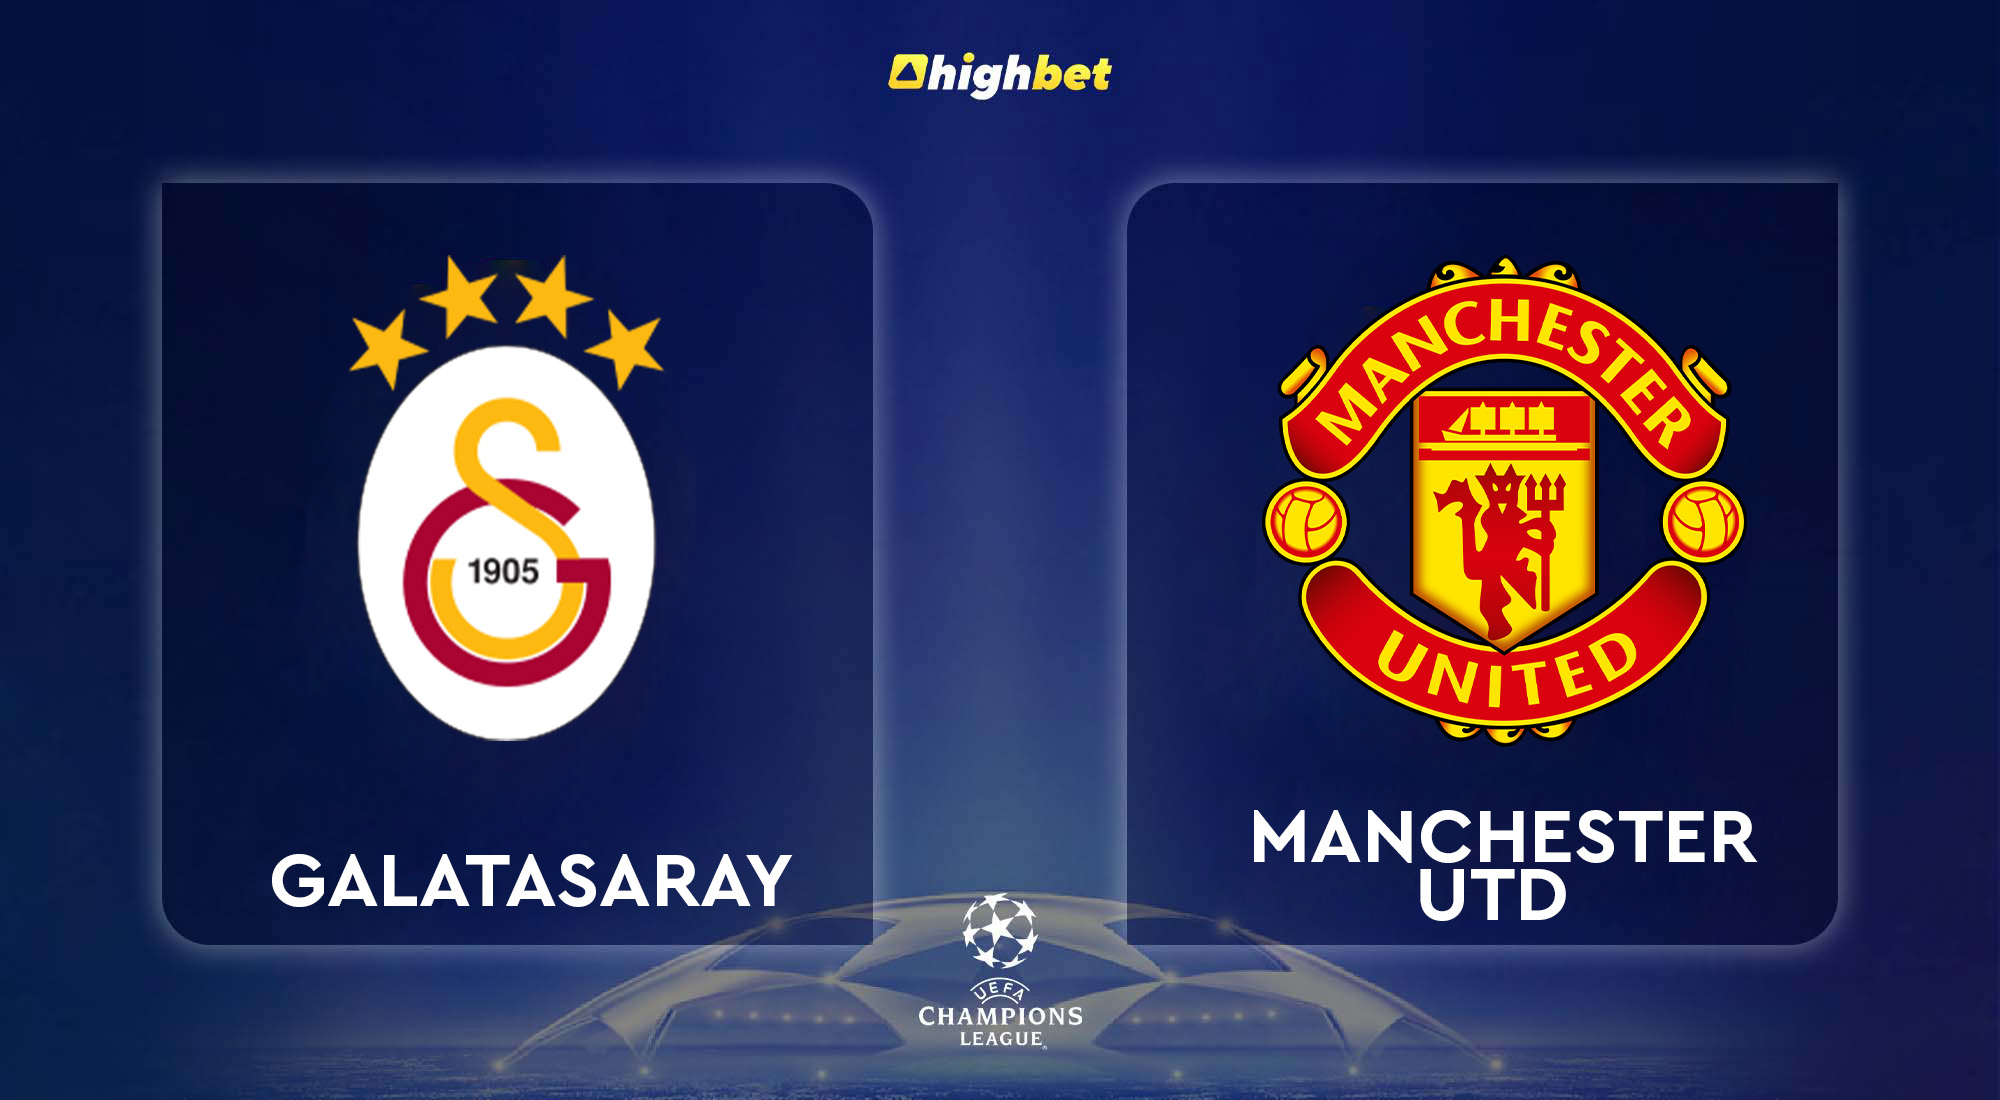 Galatasaray vs Manchester United - highbet UEFA Champions League Pre-Match Analysis